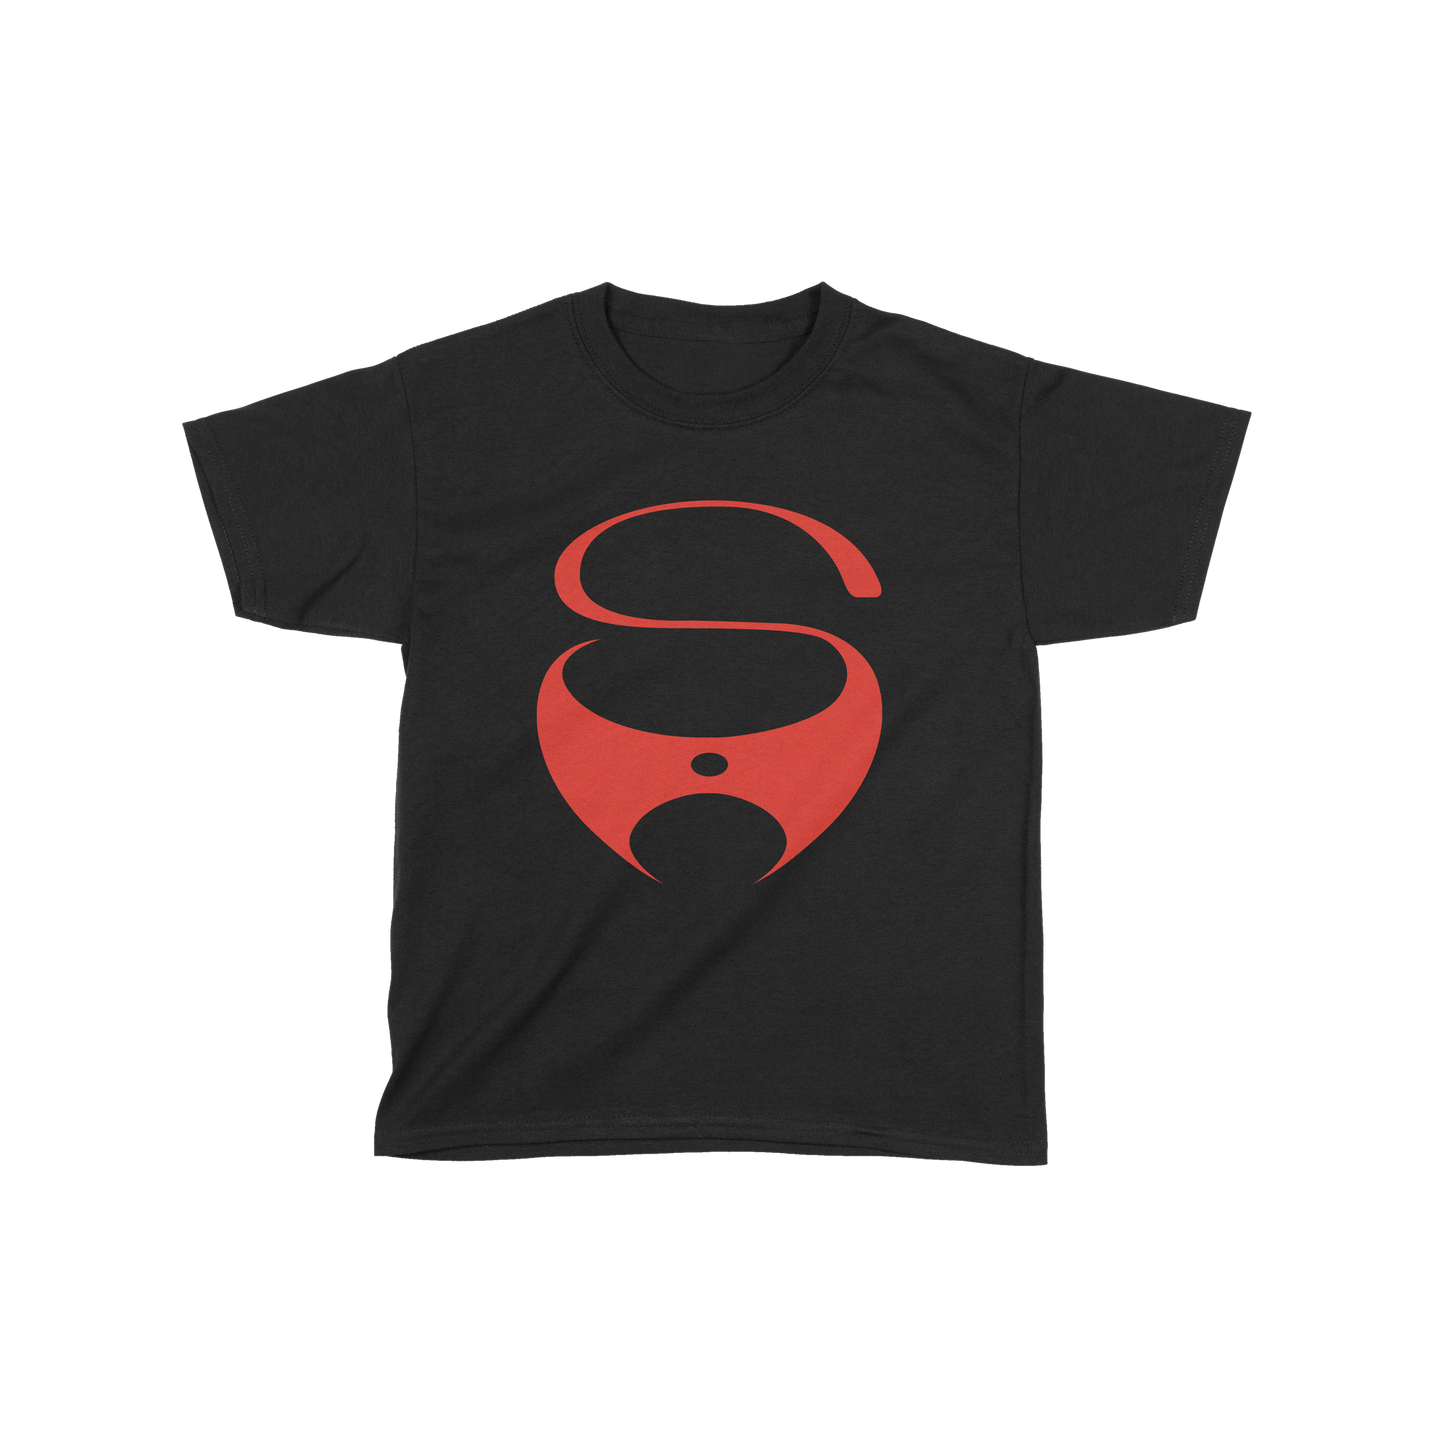 Kids Retro Logo - T-shirt (Black/Red)